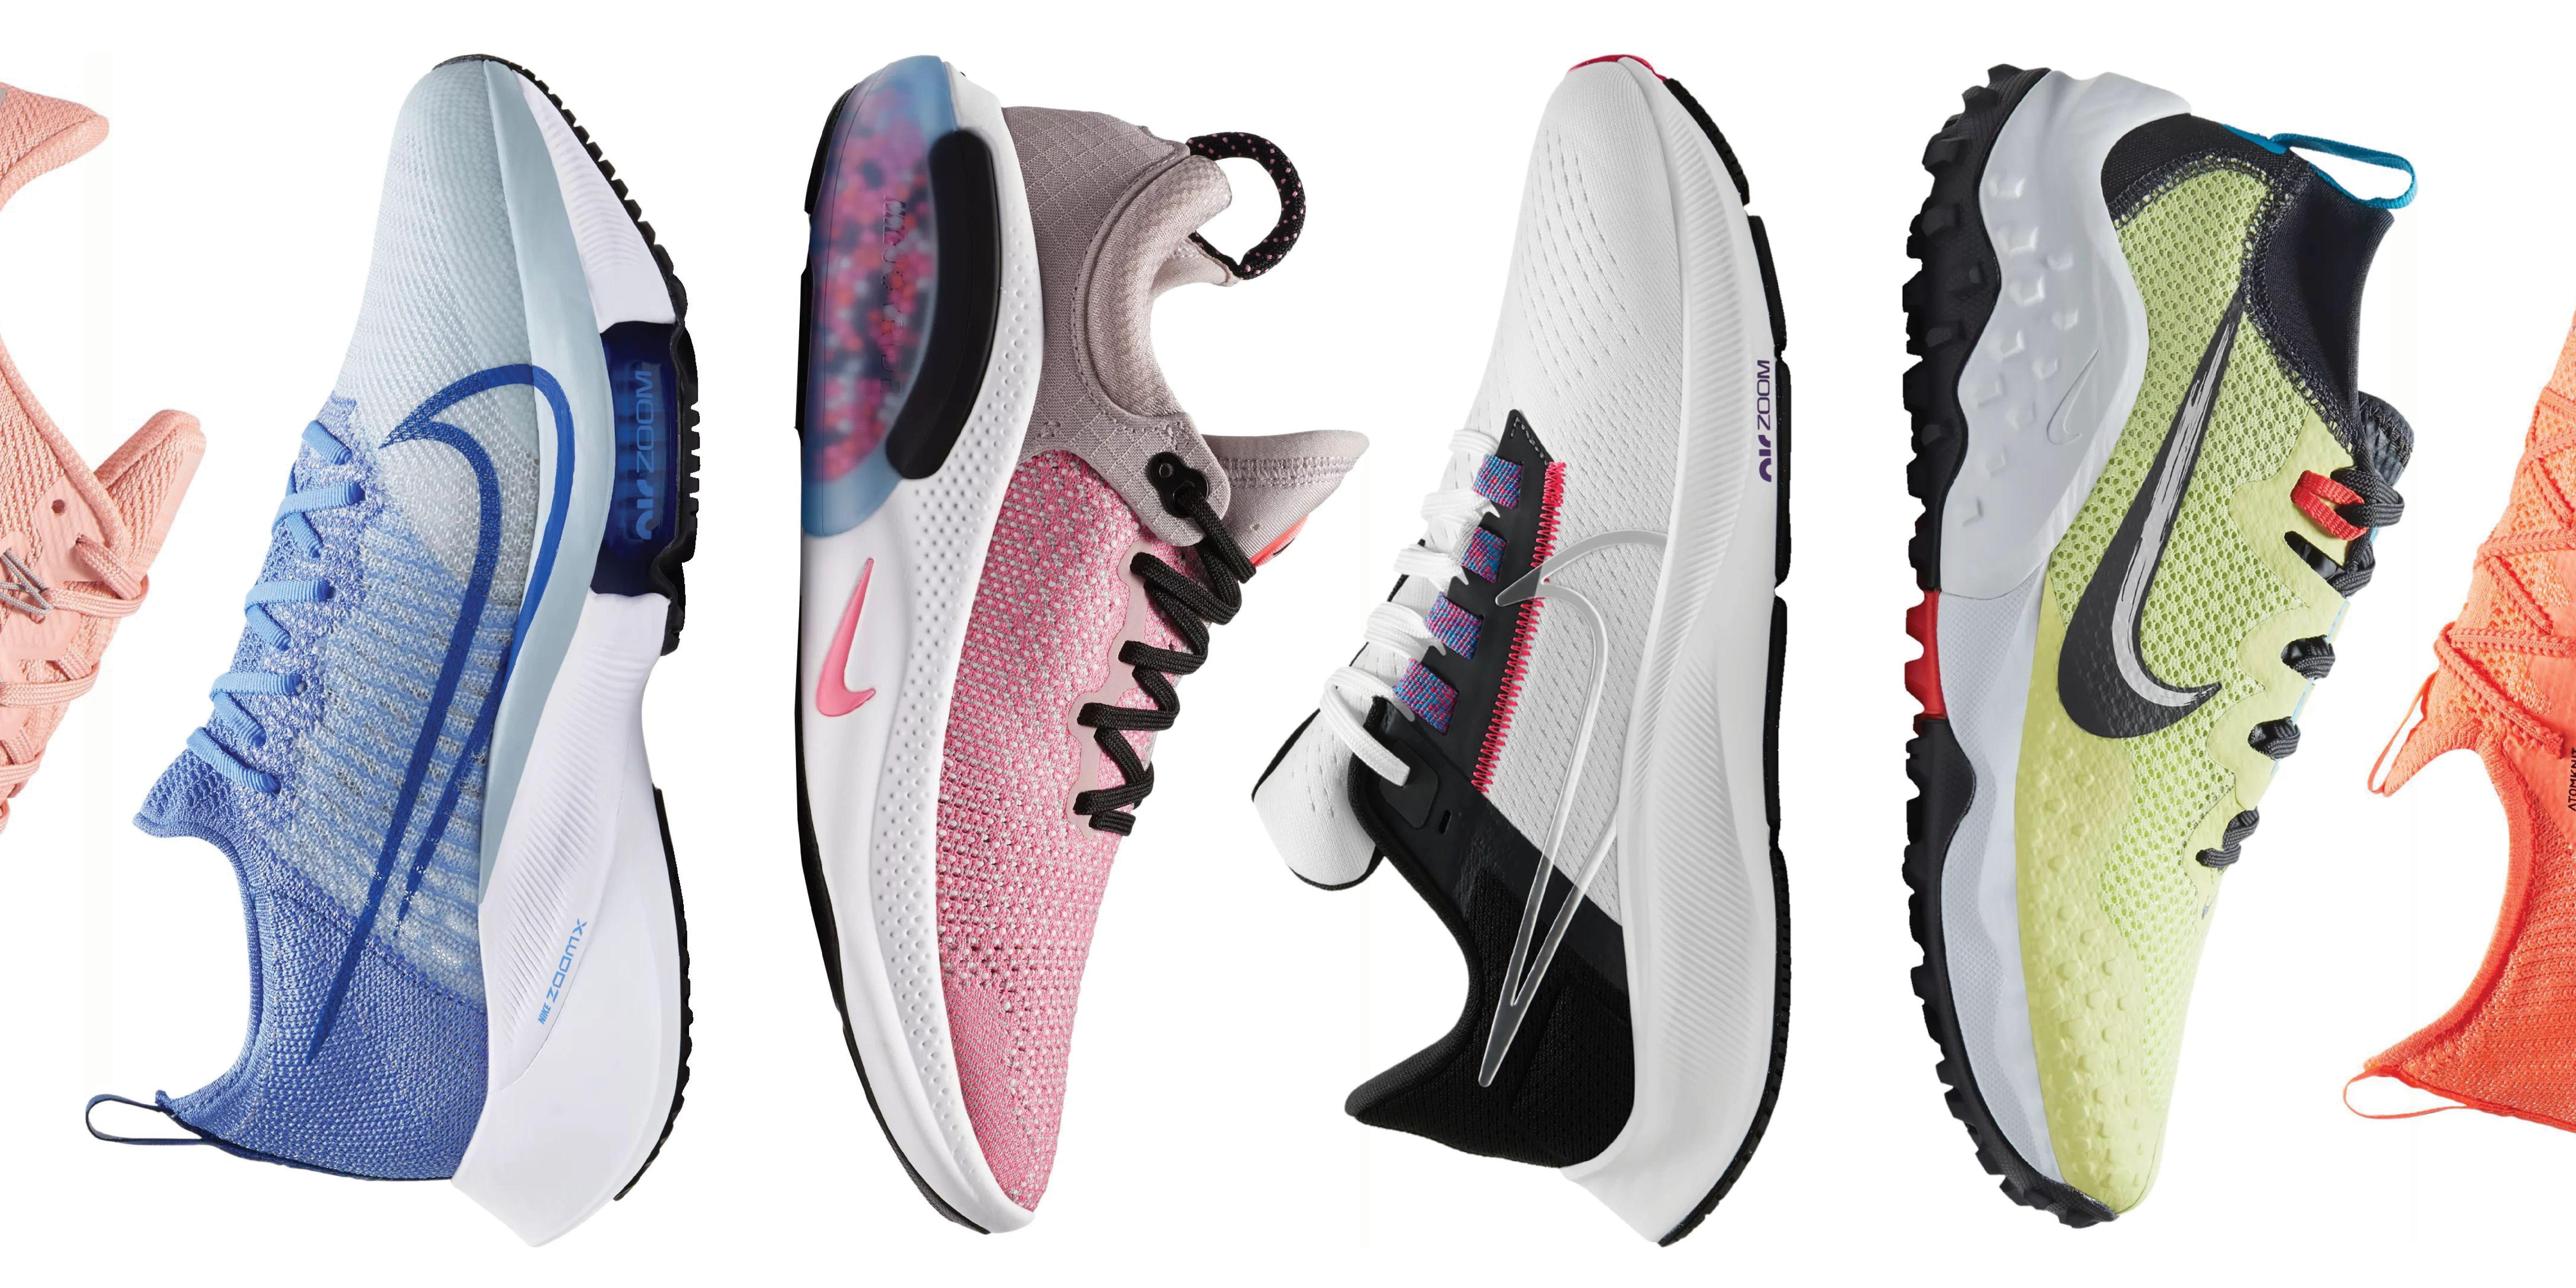 Senate Macadam Negotiate Nike Running Shoes for Women | Best Women's Nikes 2021